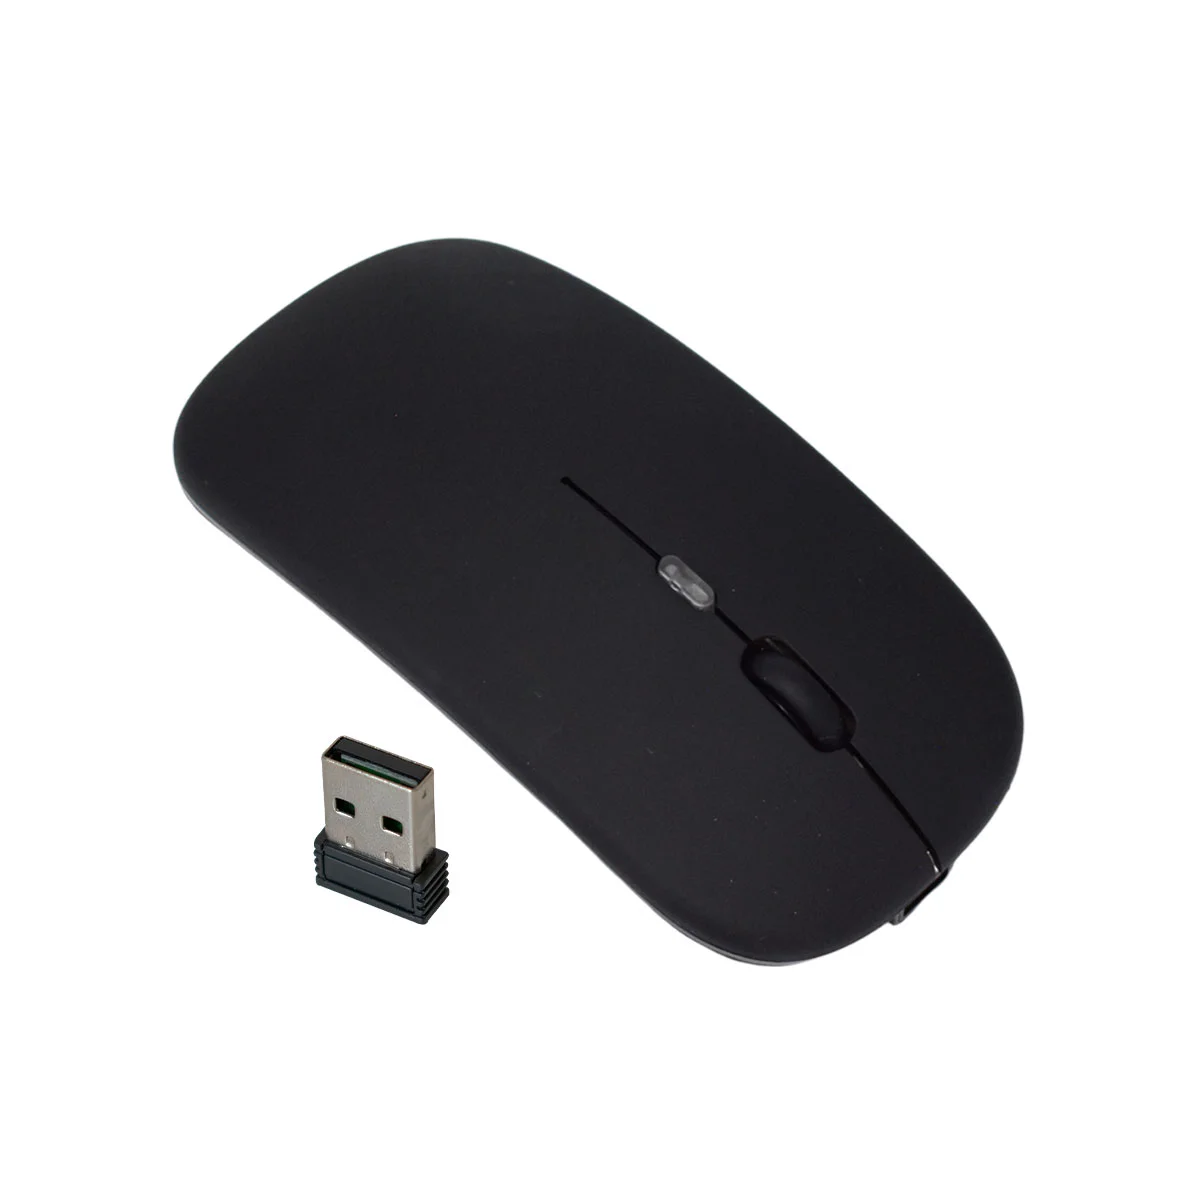 Teclado Mini inalambrico touch pad en español WB 8020